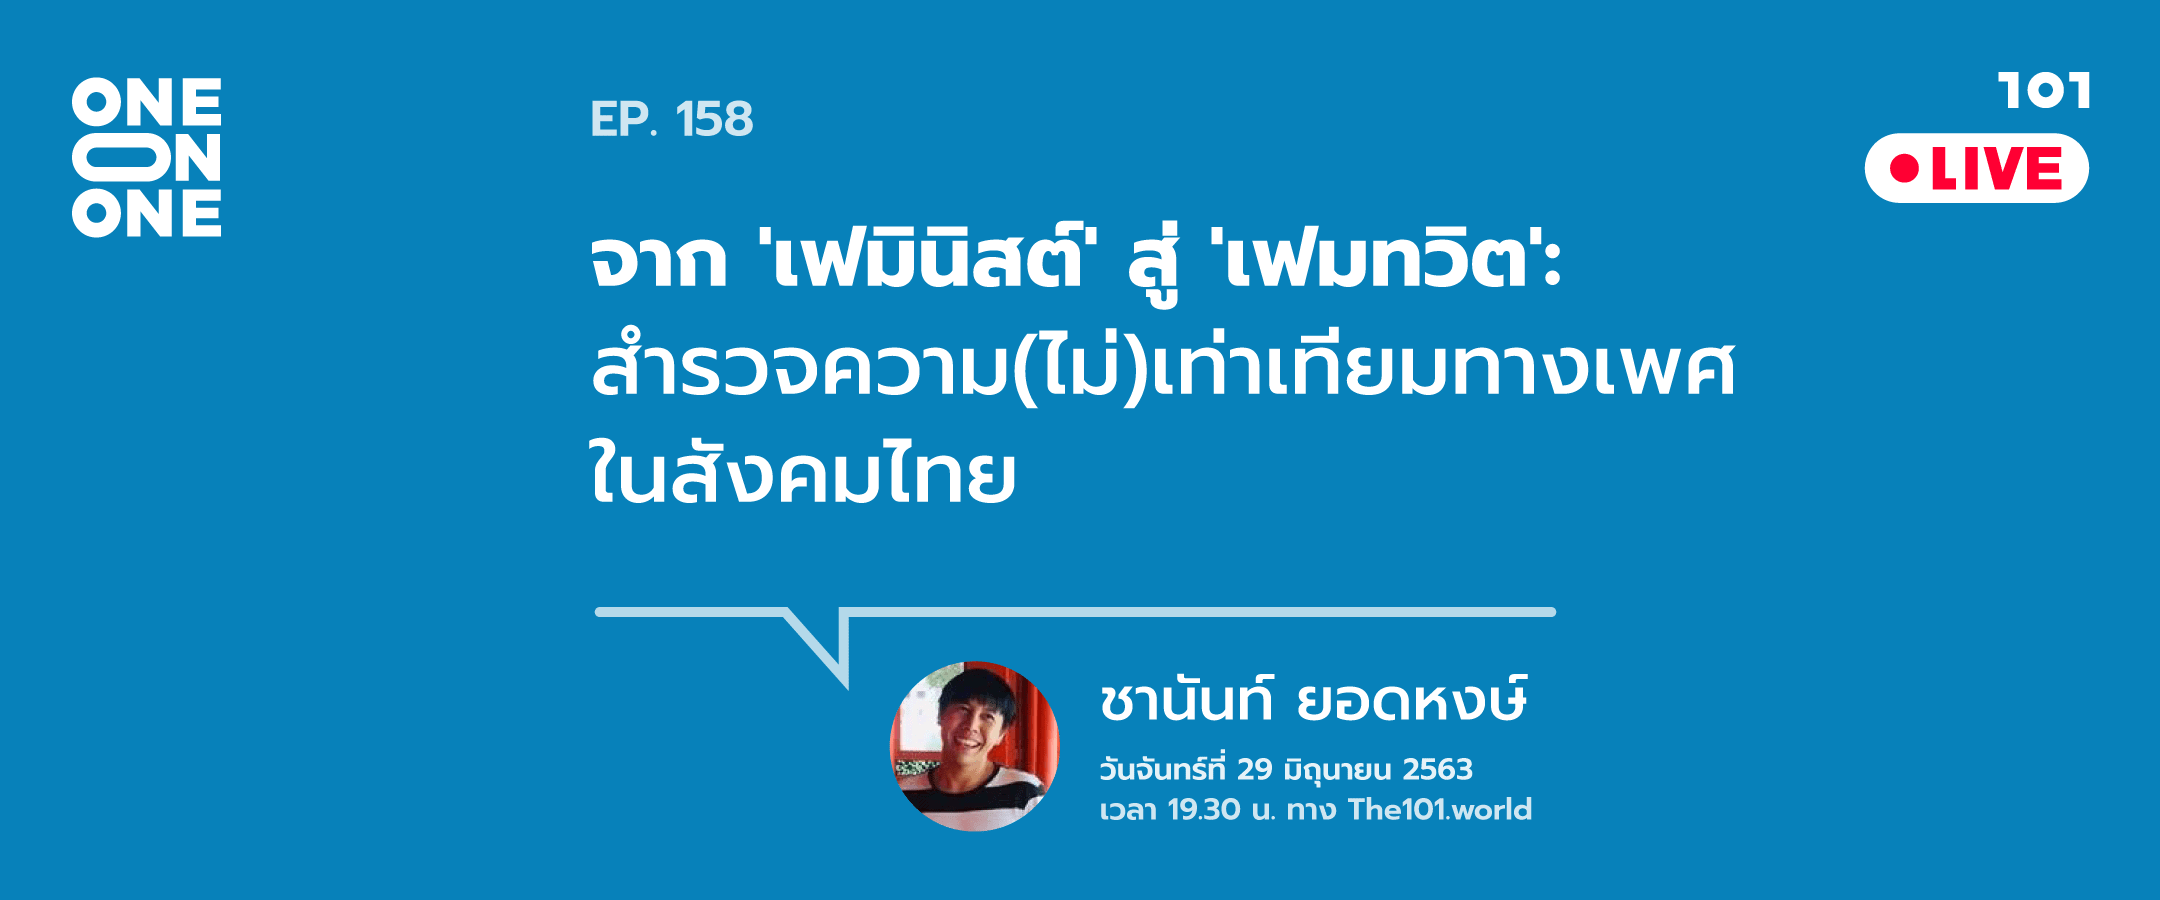 101 One-on-One Ep.158 "จาก 'เฟมินิสต์' สู่ 'เฟมทวิต': สำรวจความ(ไม่)เท่าเทียมทางเพศในสังคมไทย" กับ ชานันท์ ยอดหงษ์